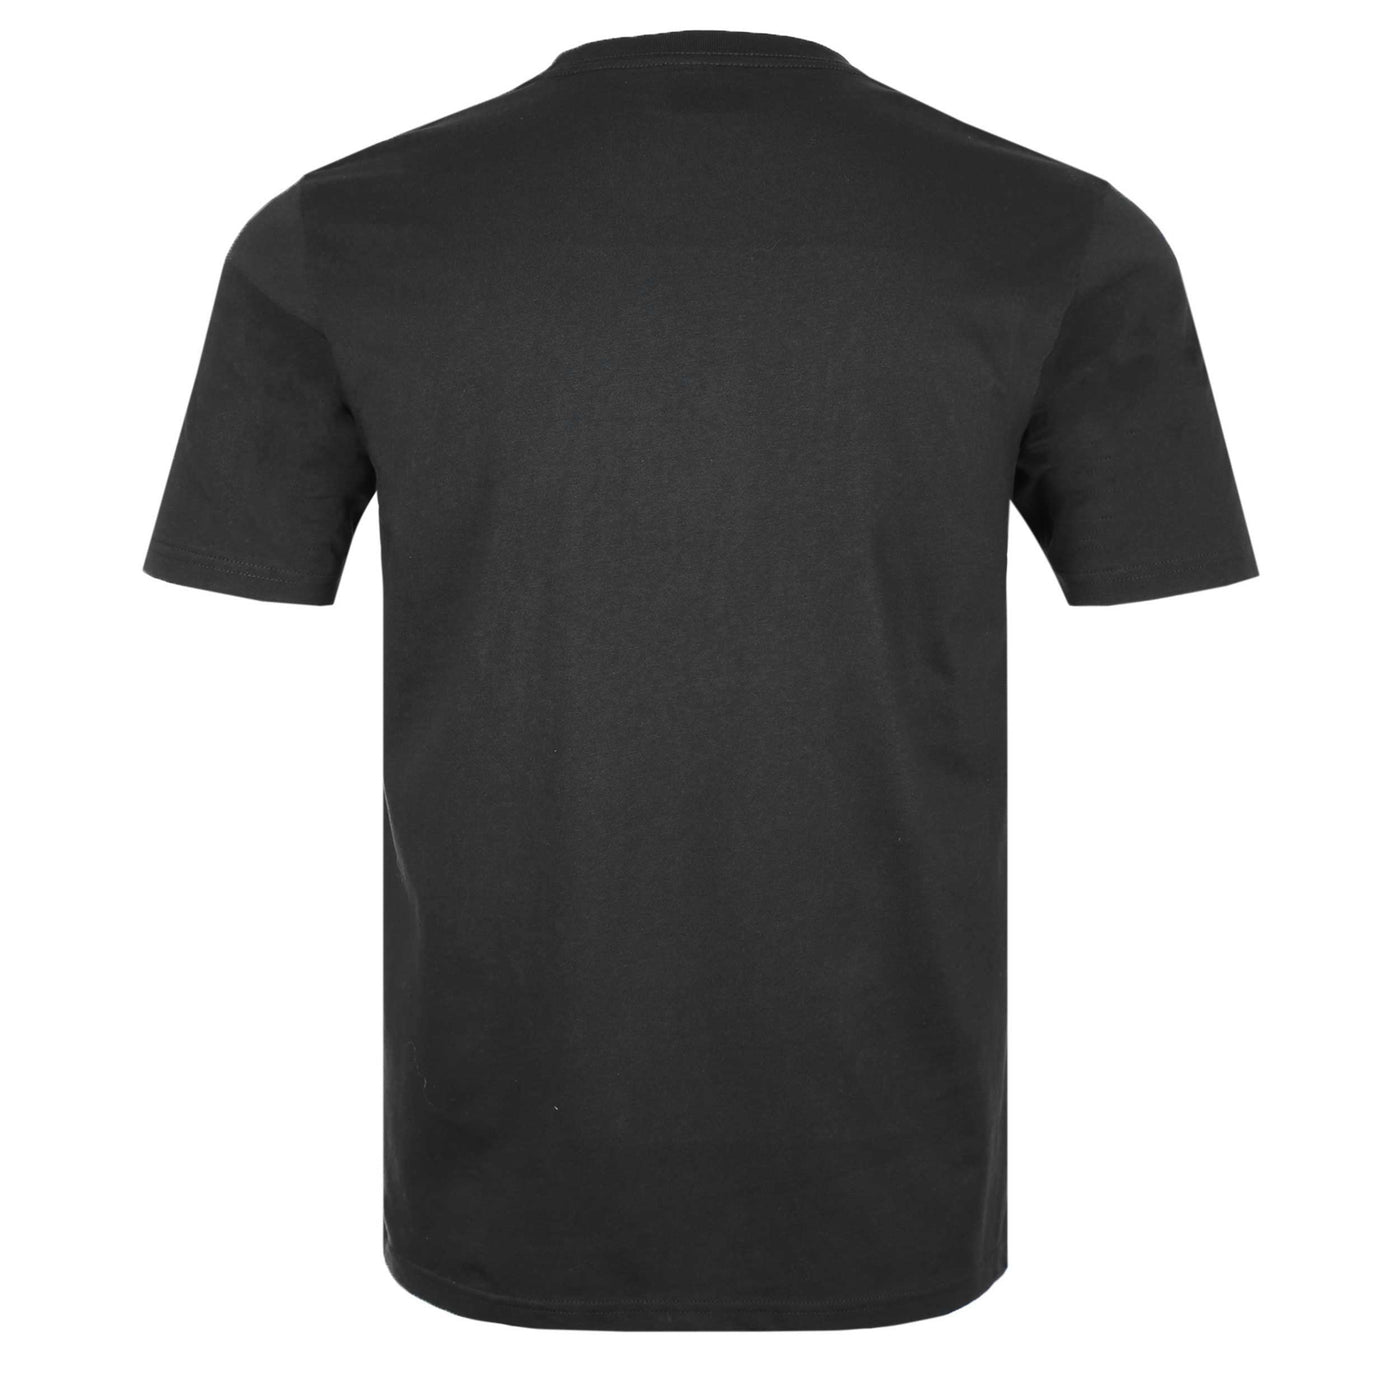 Paul Smith Rabbit T Shirt in Black